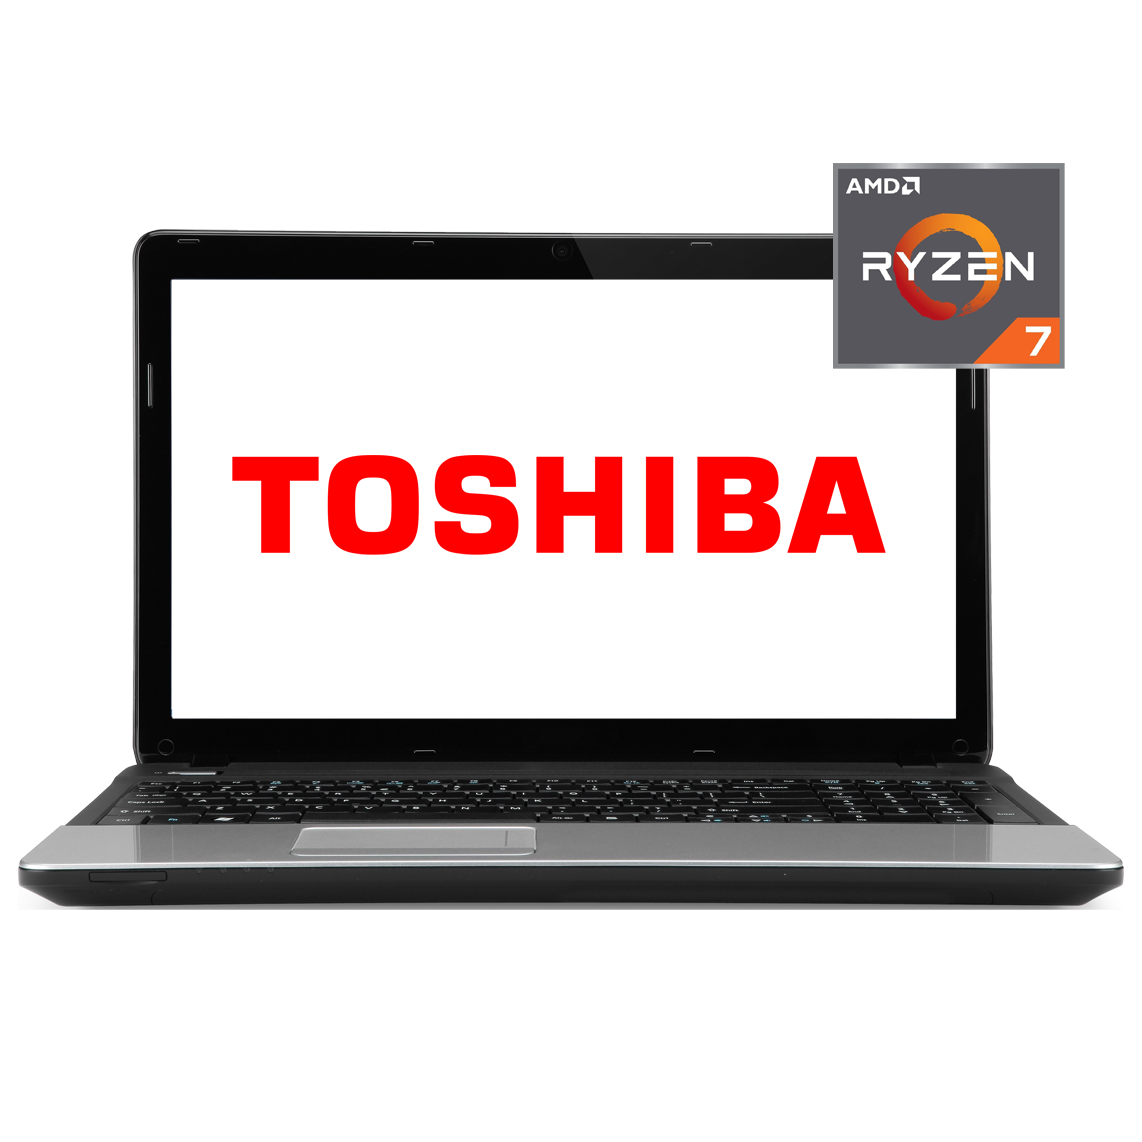 Toshiba - 16 inch AMD Ryzen 7